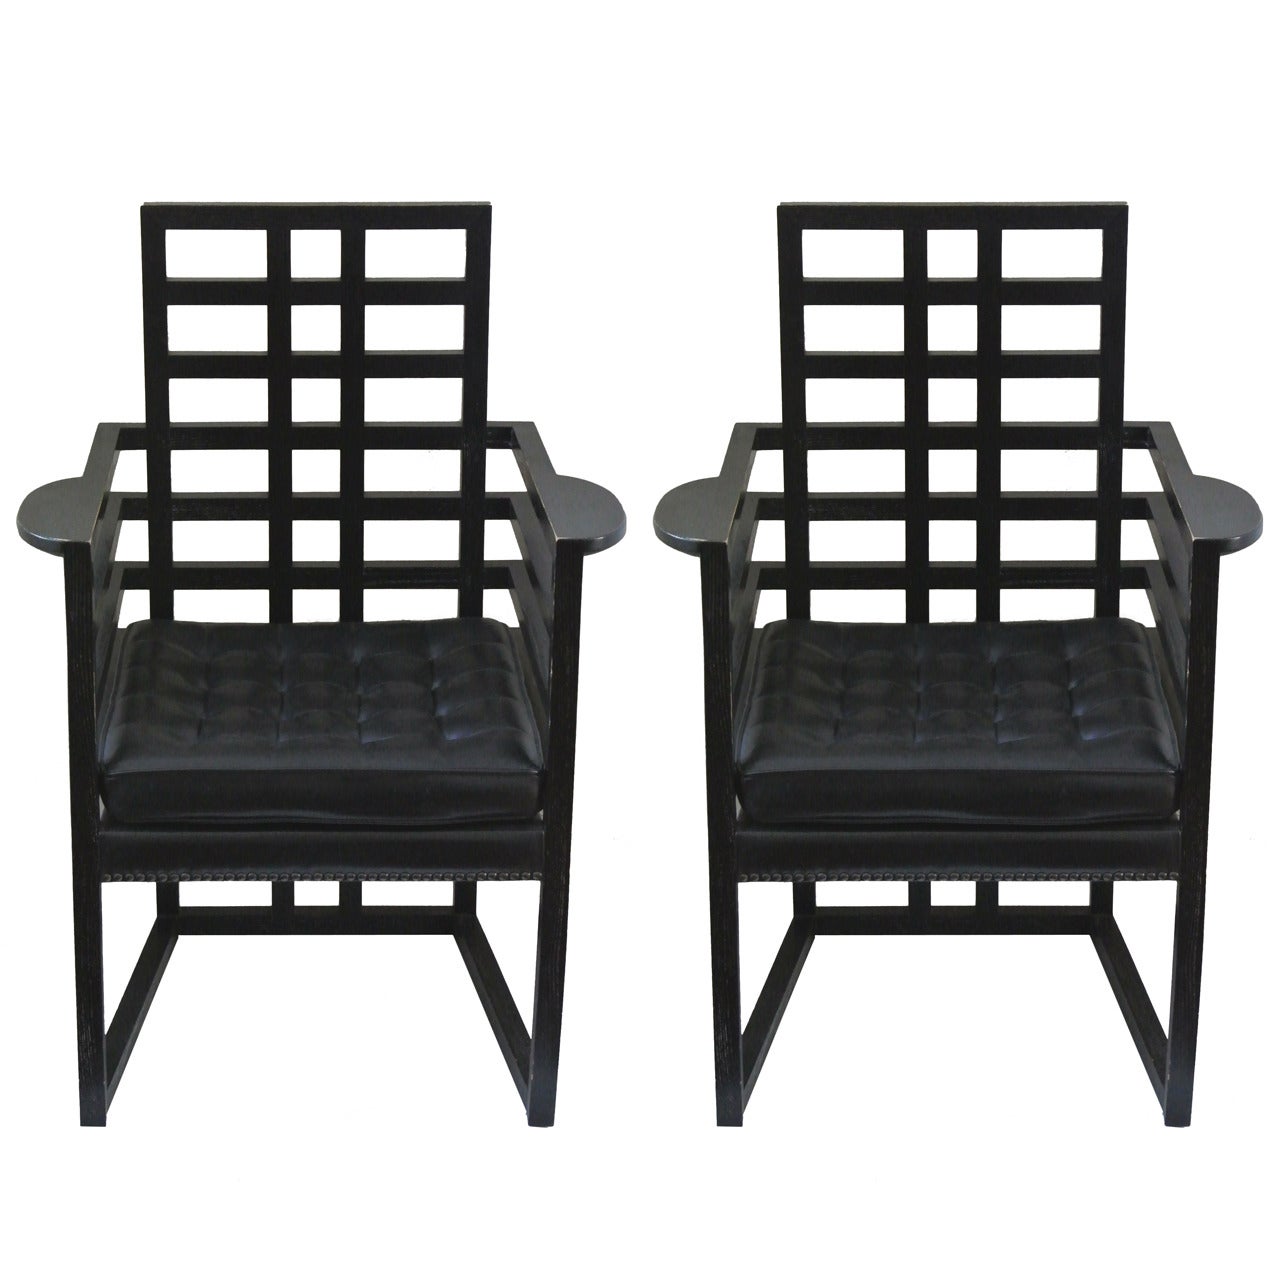 Pair of Josef Hoffmann "Armloffel" Chairs Made by Wittmann